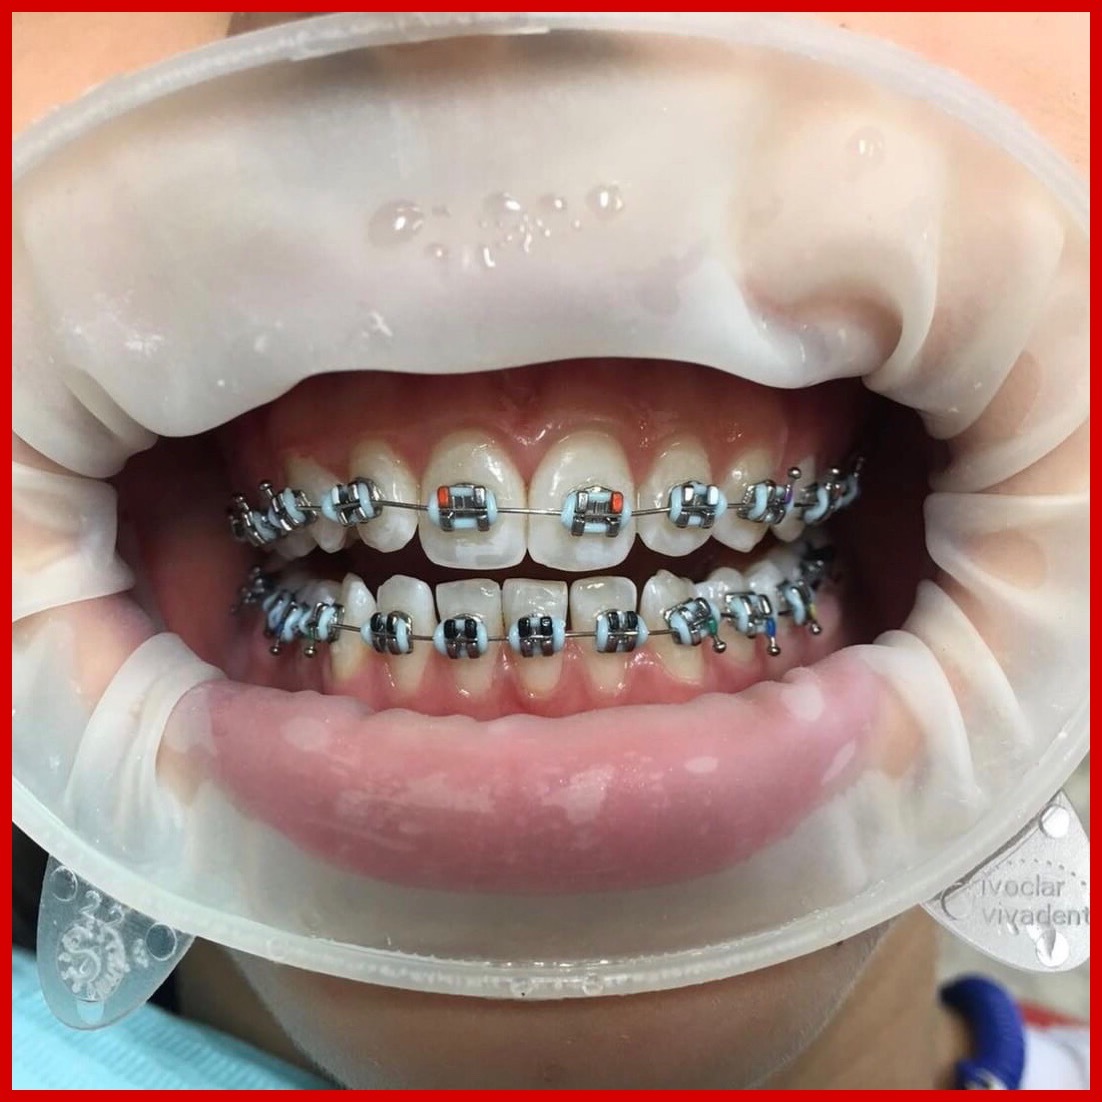 Как выглядят керамические брекеты на зубах фото